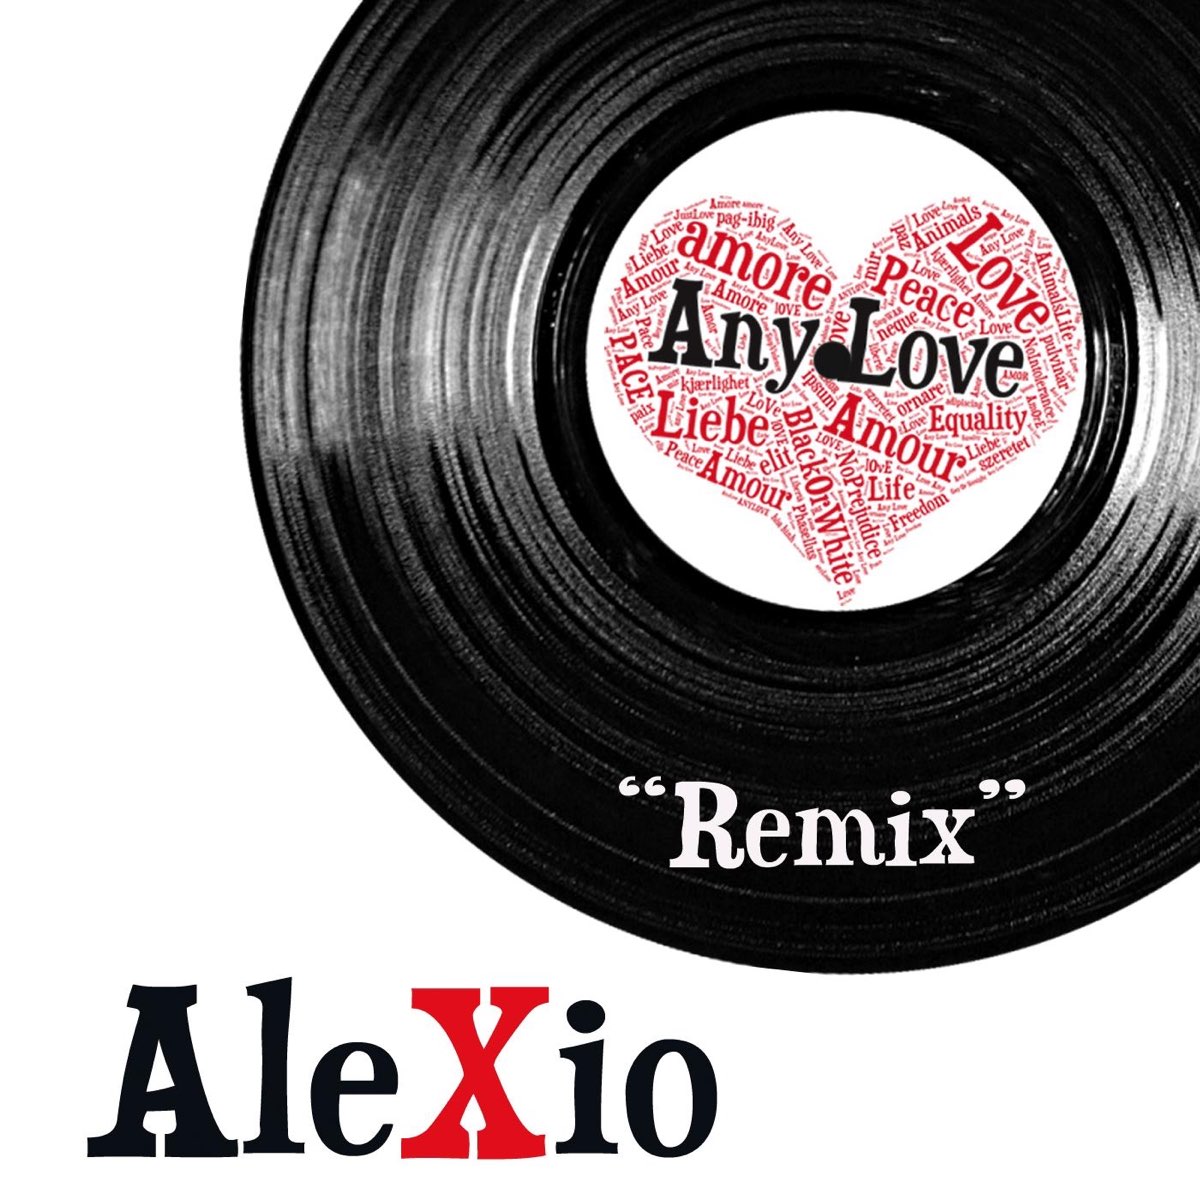 Give love remix. Love Remix. Lovely песня ремикс. Любимые Remix. Any Love.